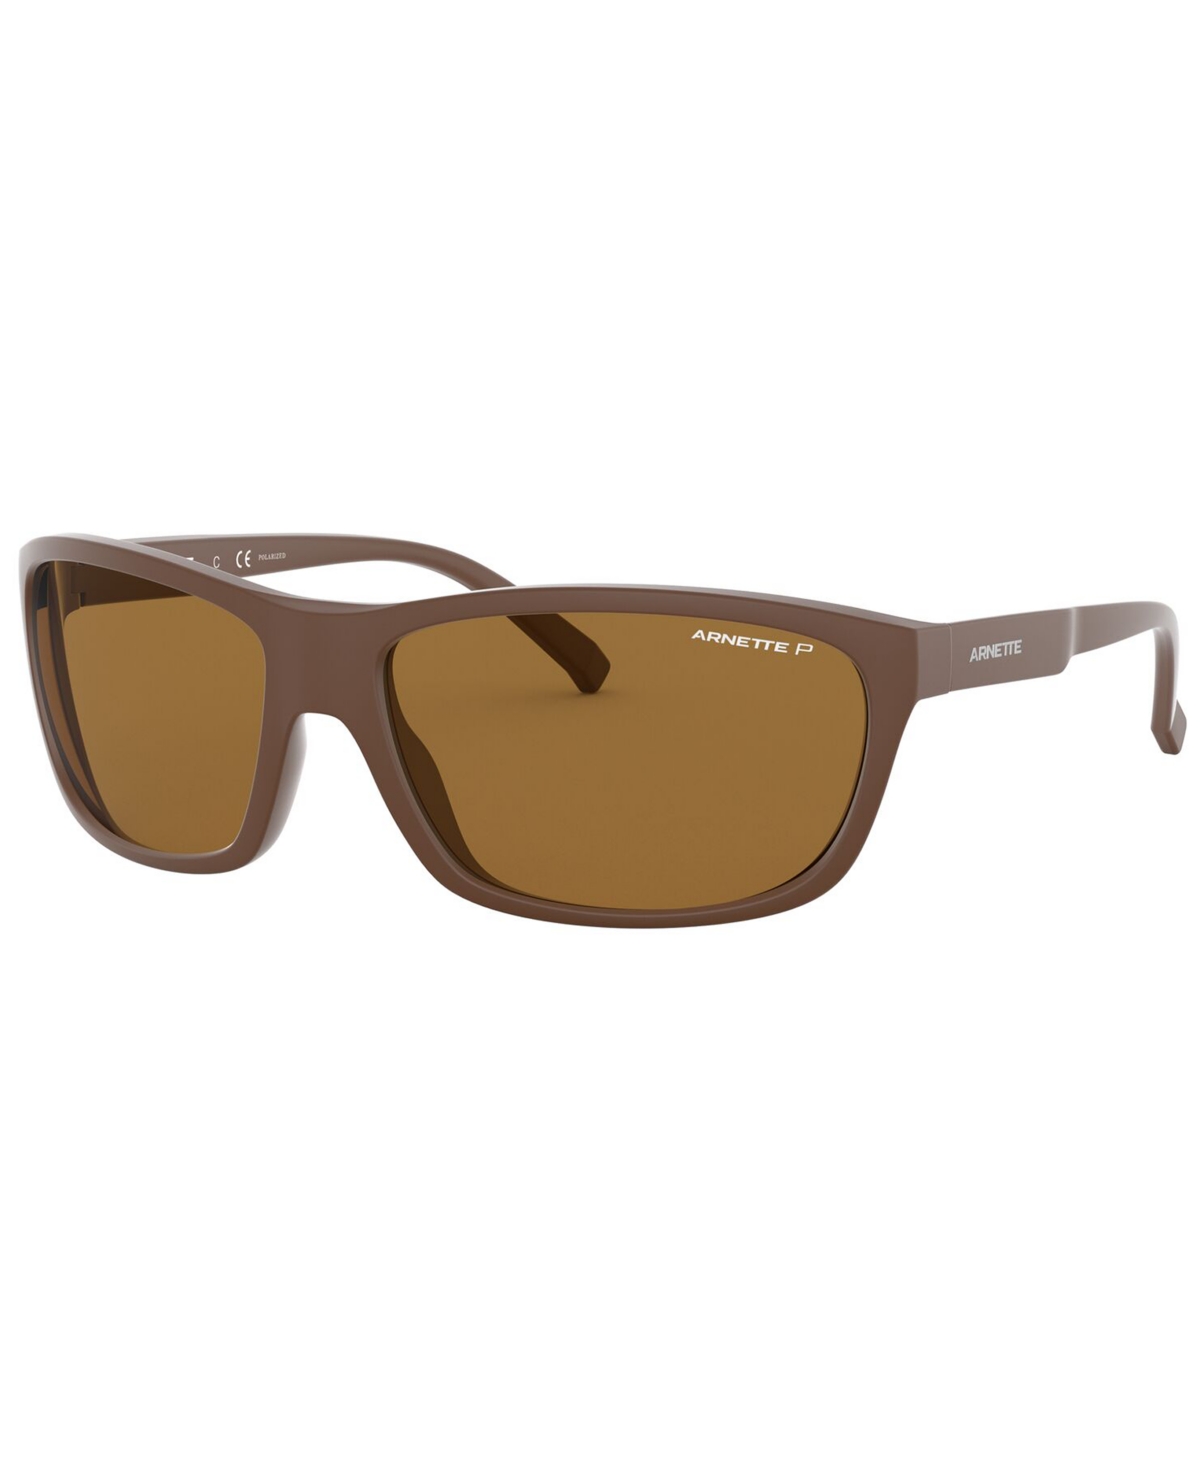 Men's Polarized Sunglasses - MATTE BROWN/POLAR BROWN